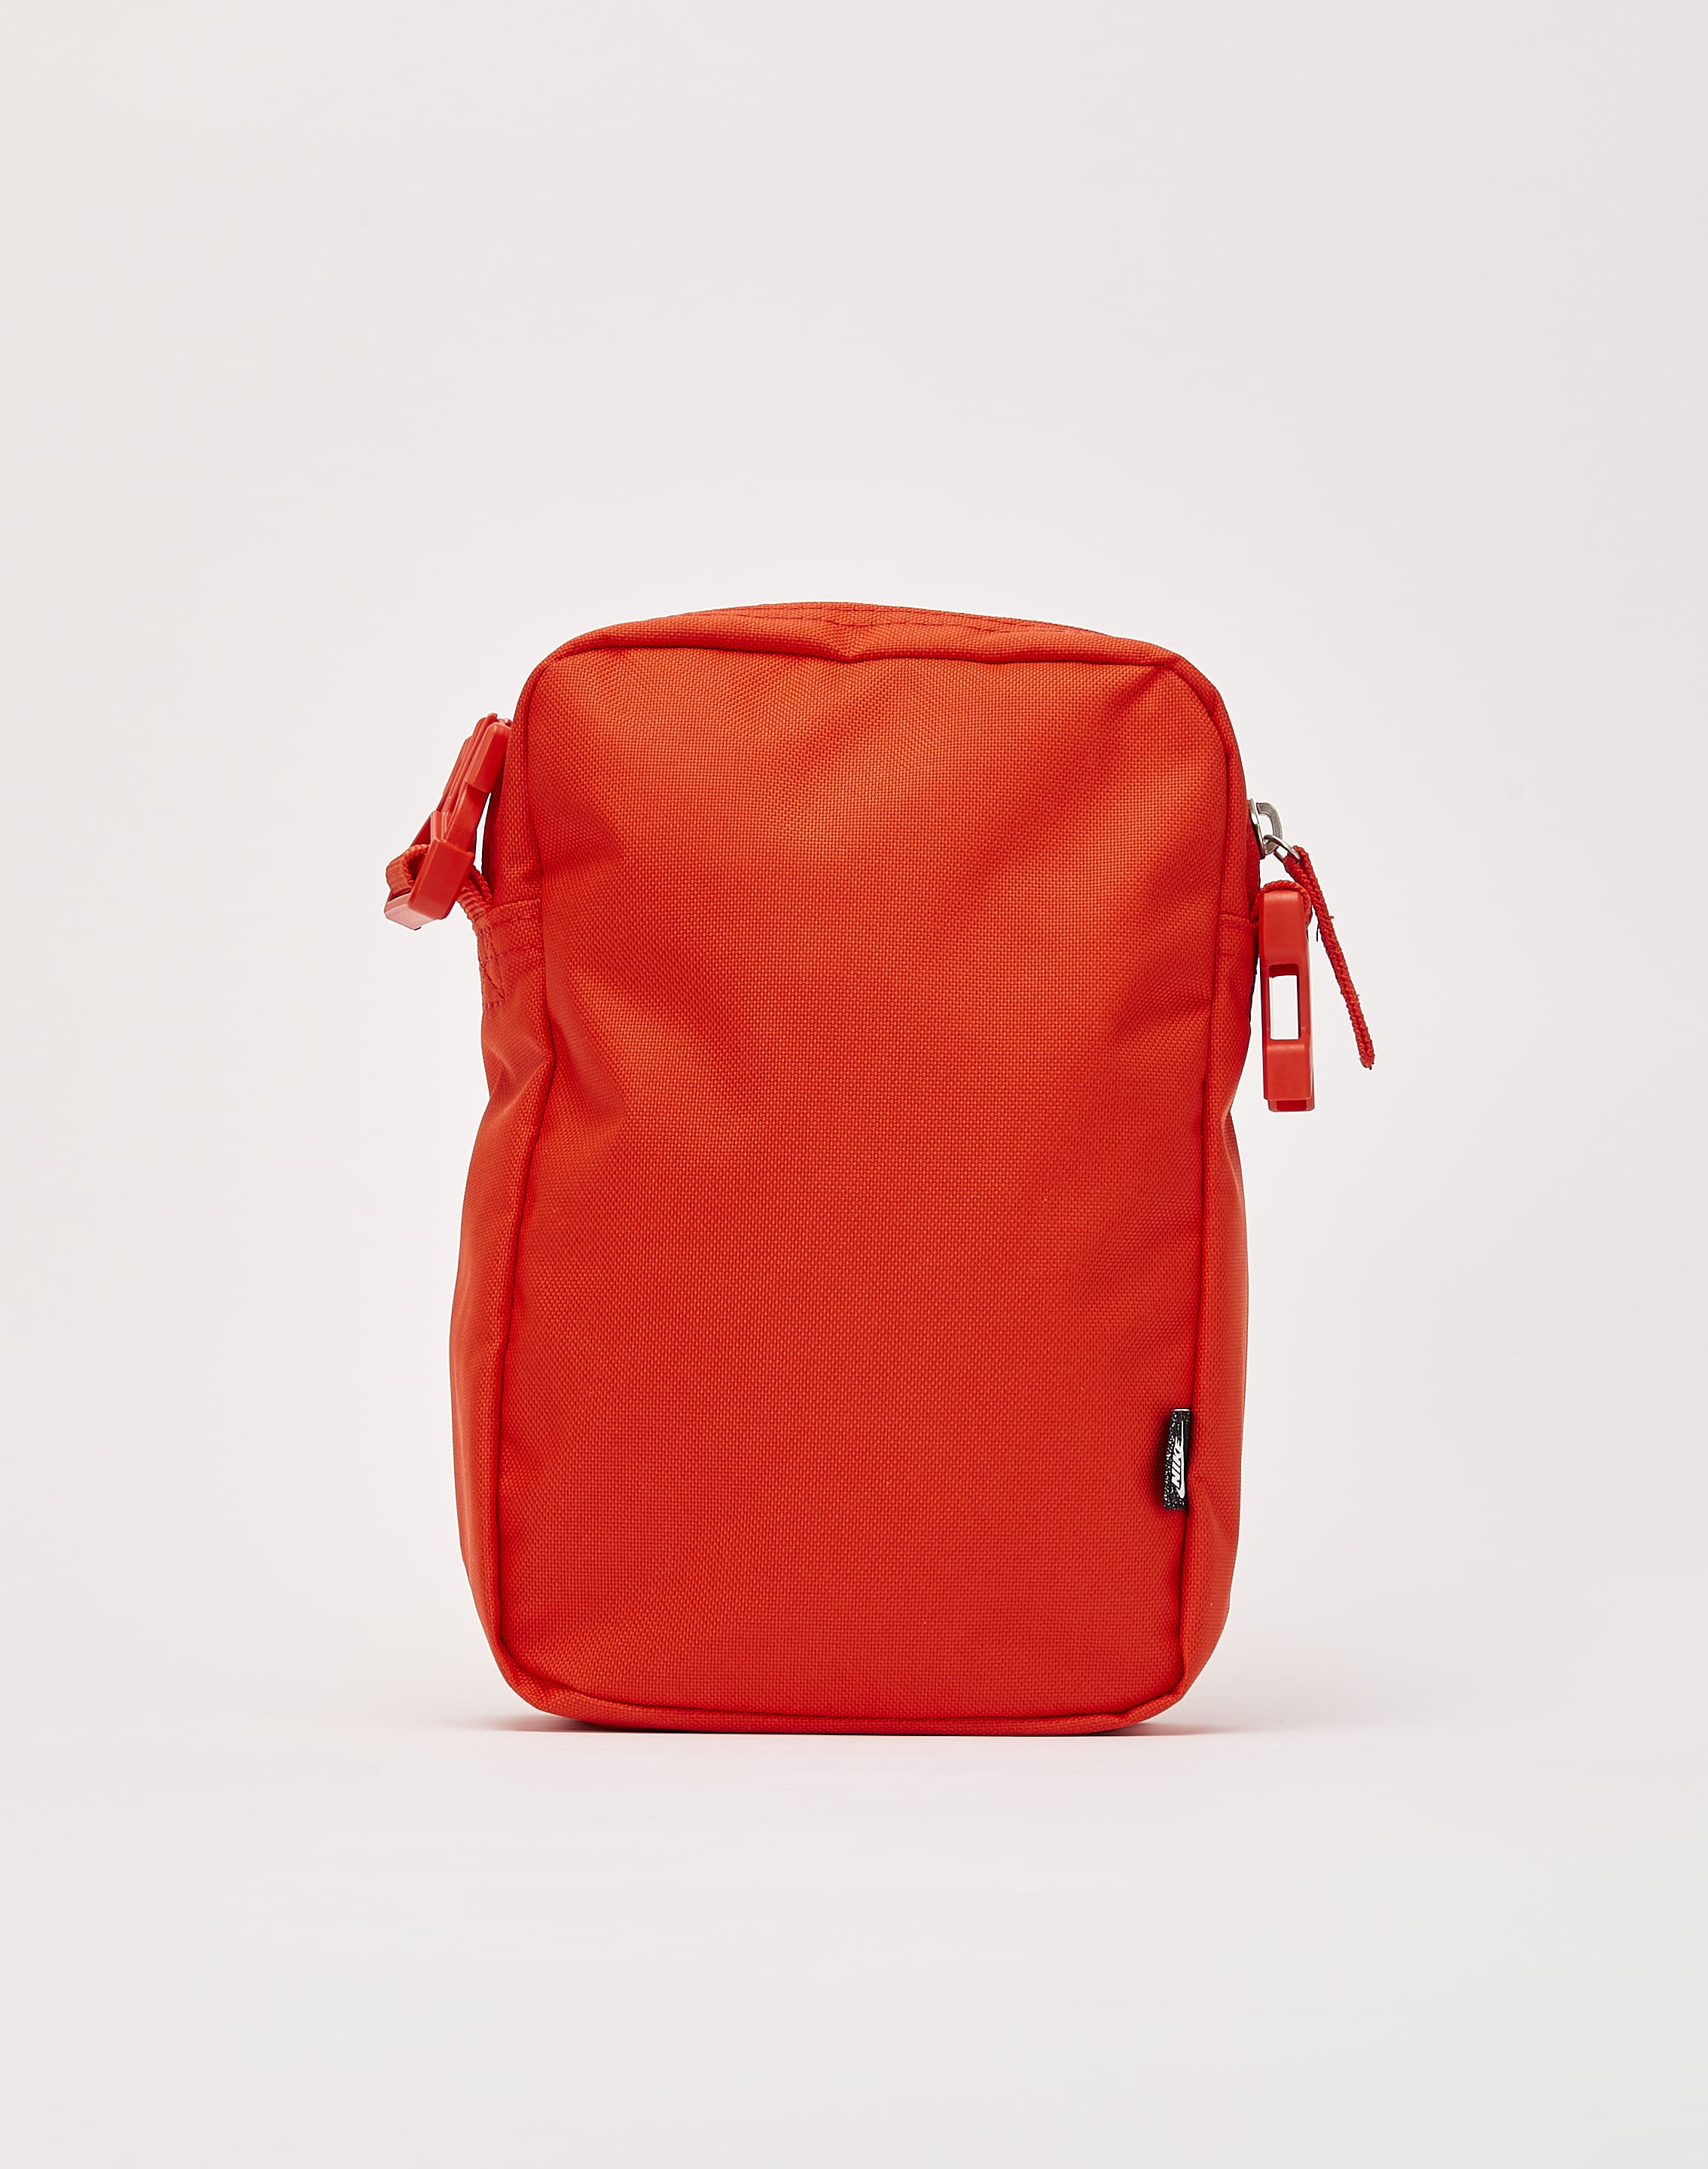 Best Budget Sling Bags/Waist Bag for Men on Amazon, Zara, Nike, Mokobara |  ONE CHANCE - YouTube